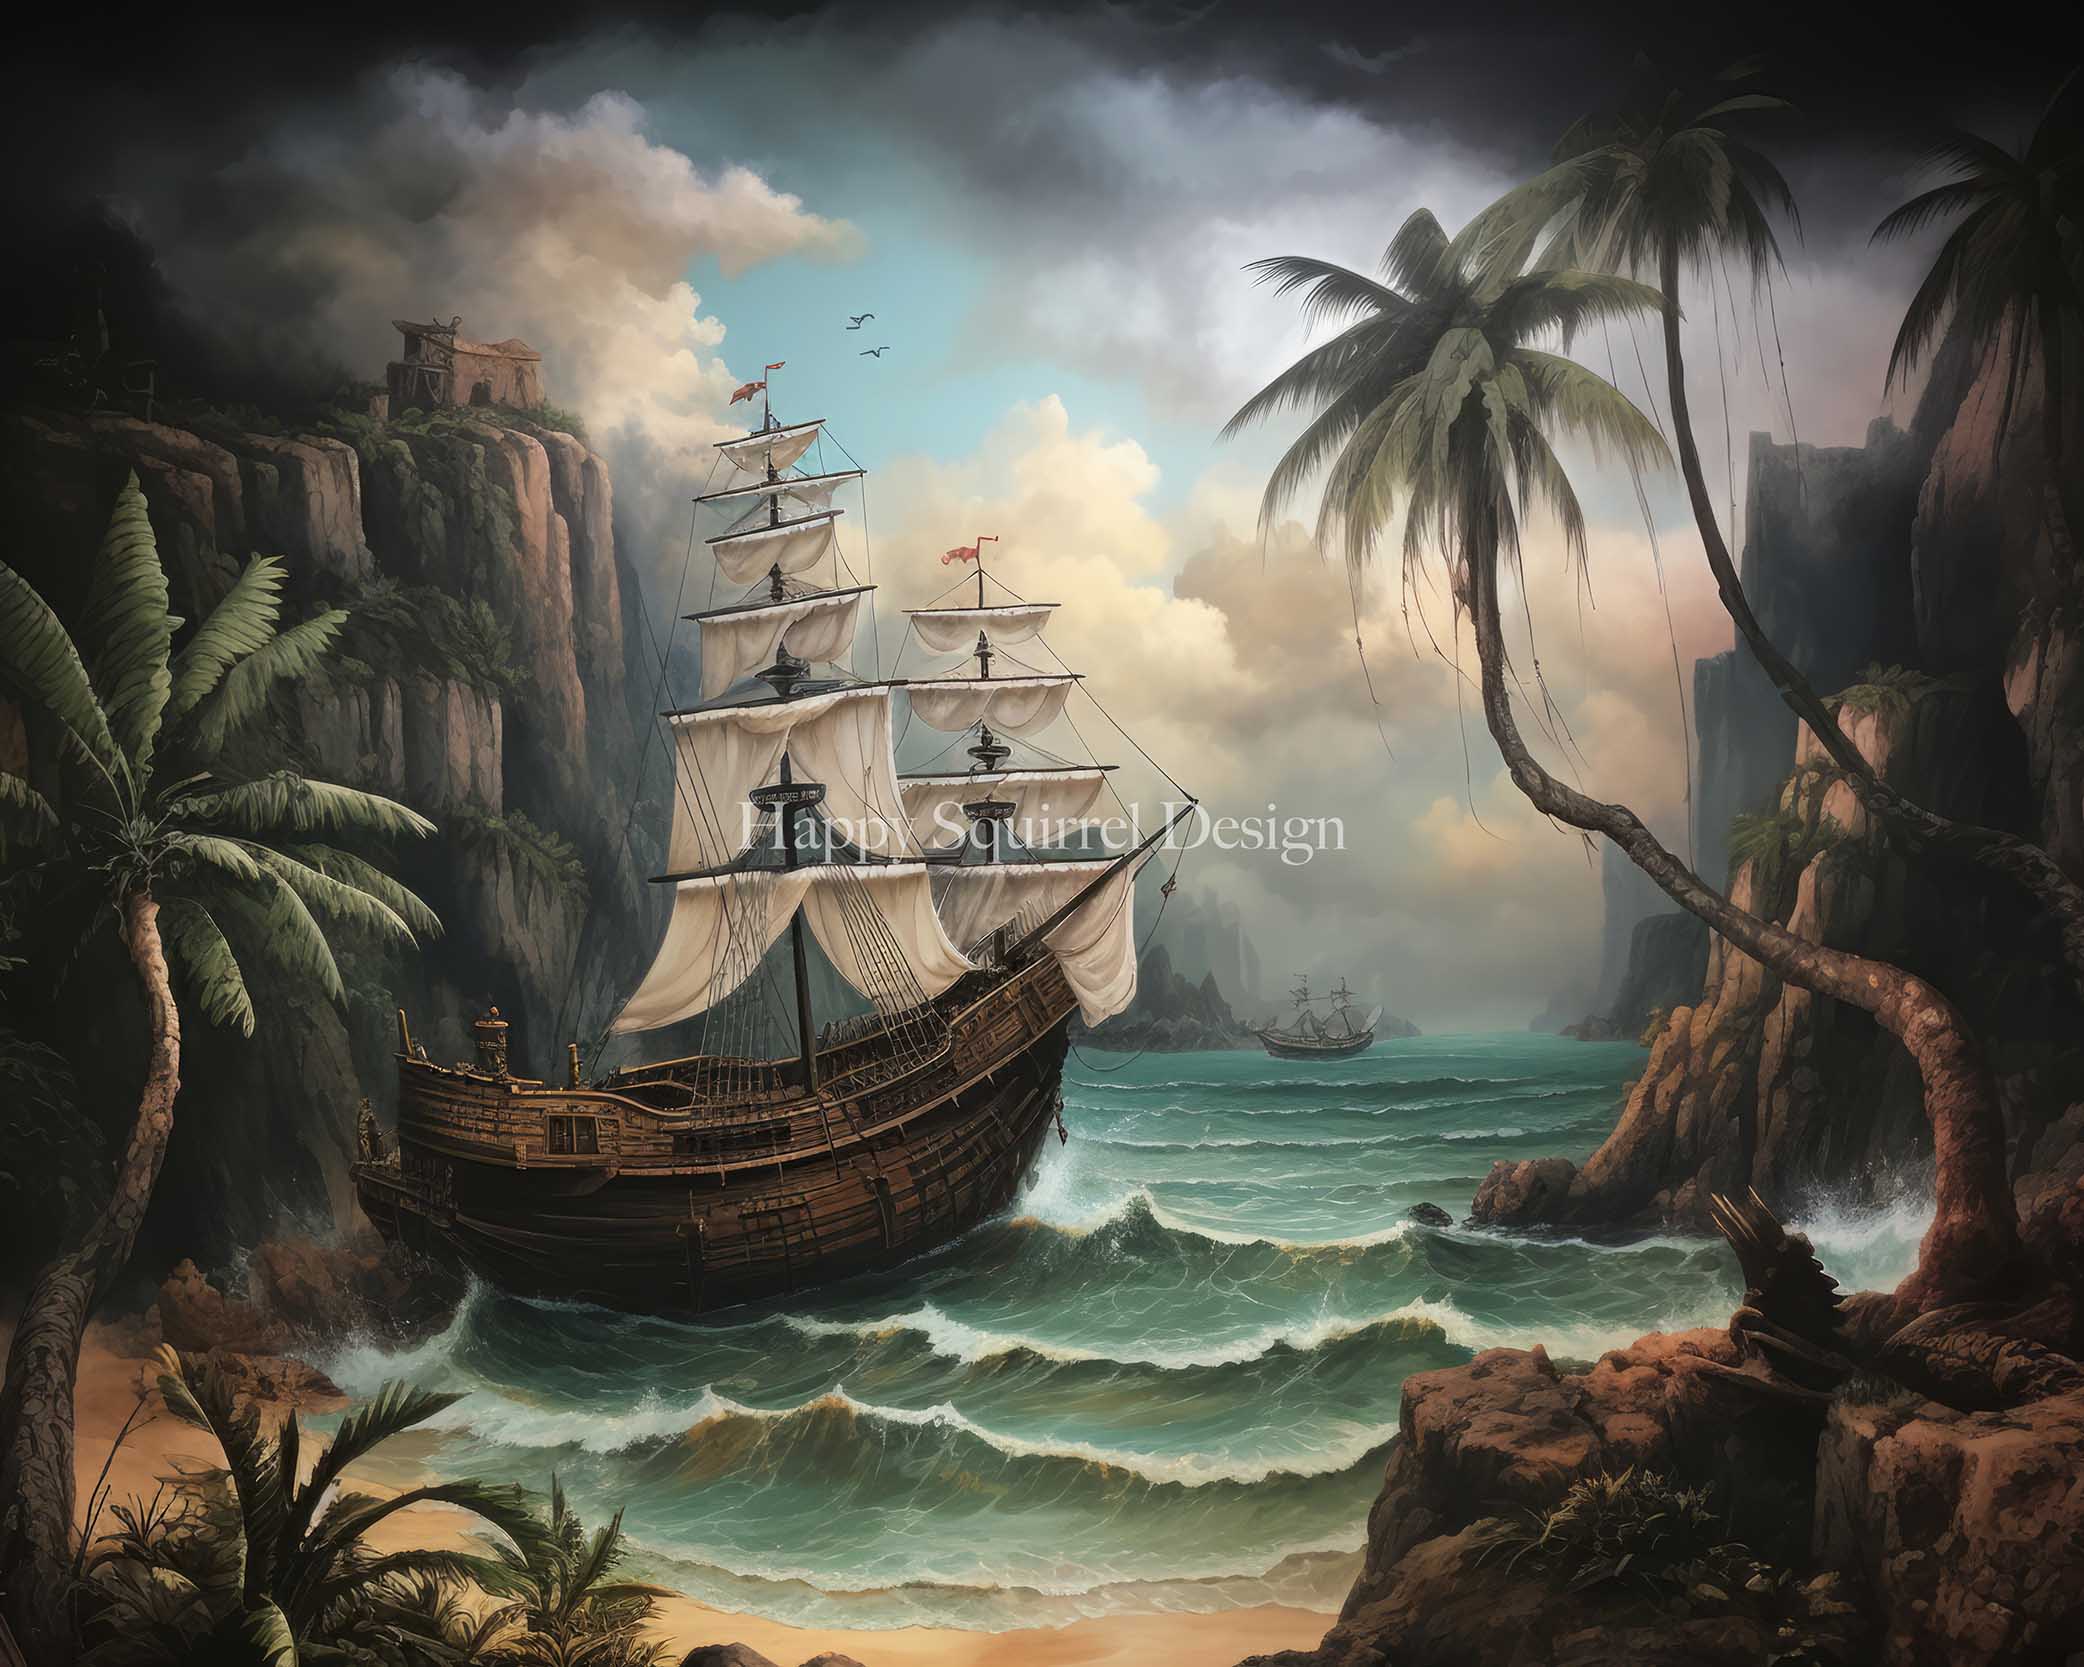 Kate Shipwreck Sea Boat Backdrop Designed by Happy Squirrel Design